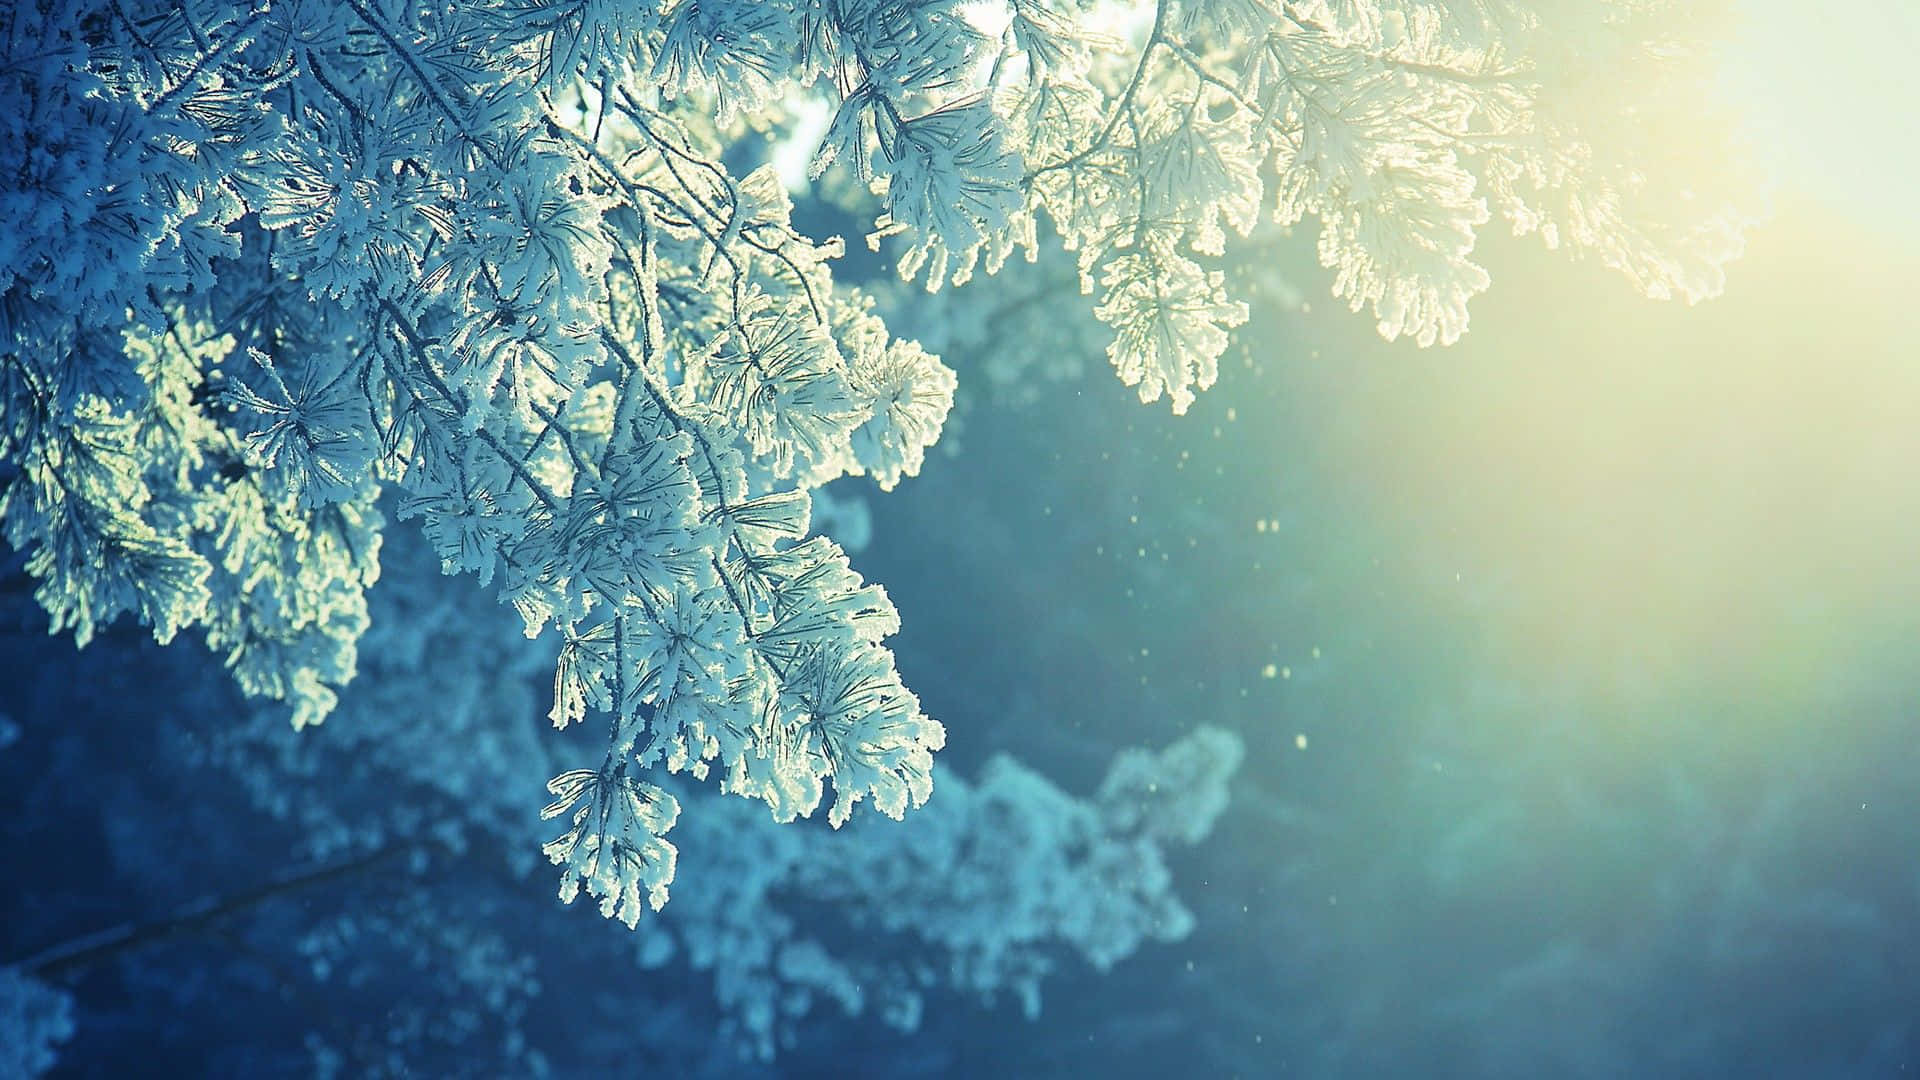 Snow Trees - A Serene Winter Landscape Wallpaper